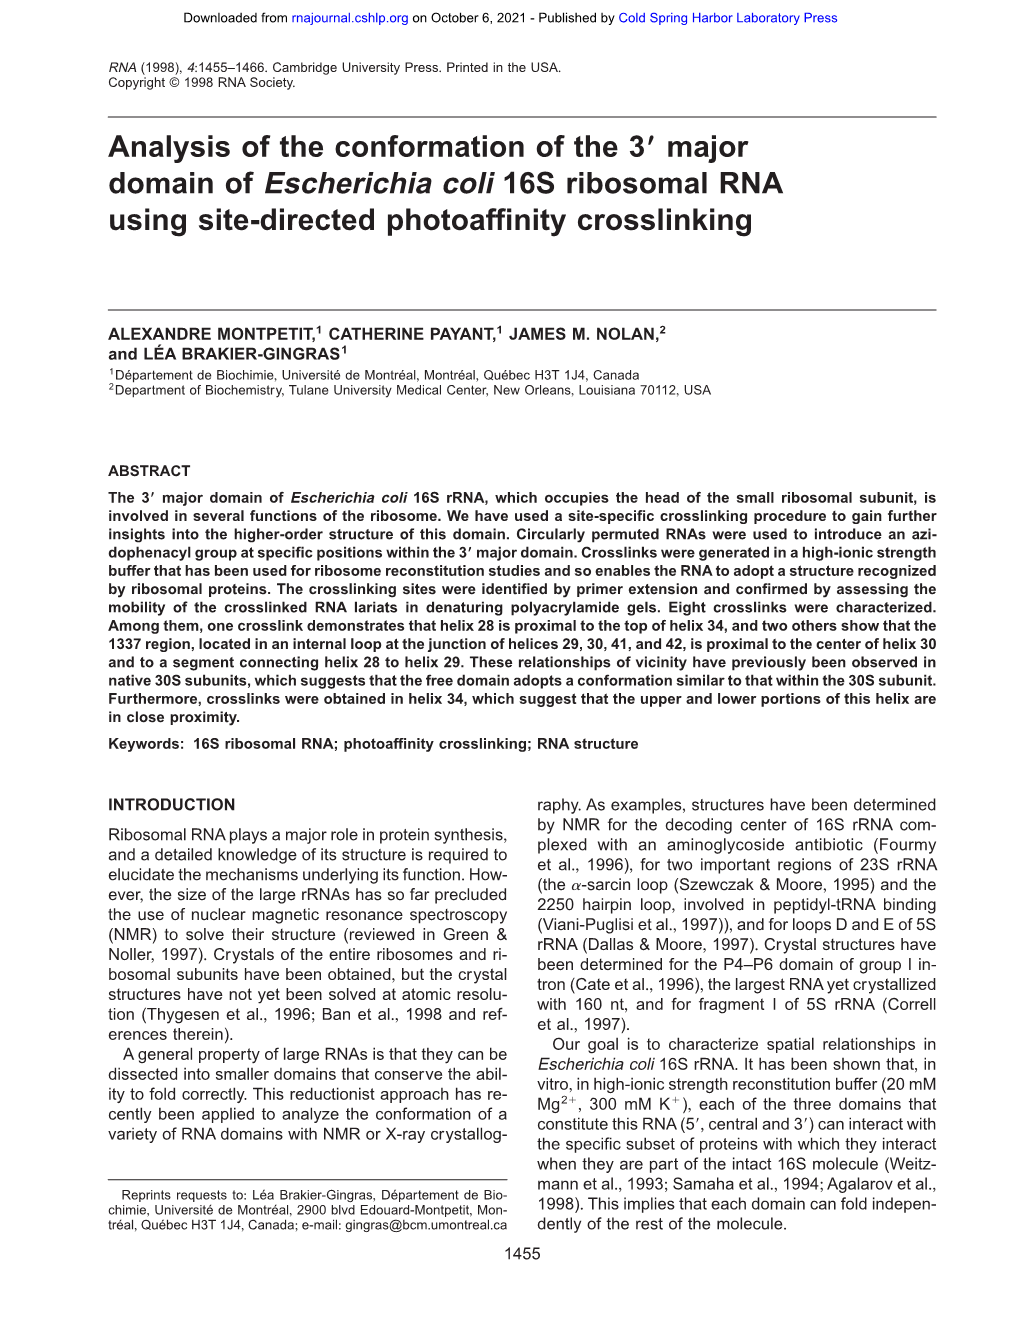 Domain of Escherichia Coli 16S Ribosomal RNA Using Site-Directed Photoaffinity Crosslinking